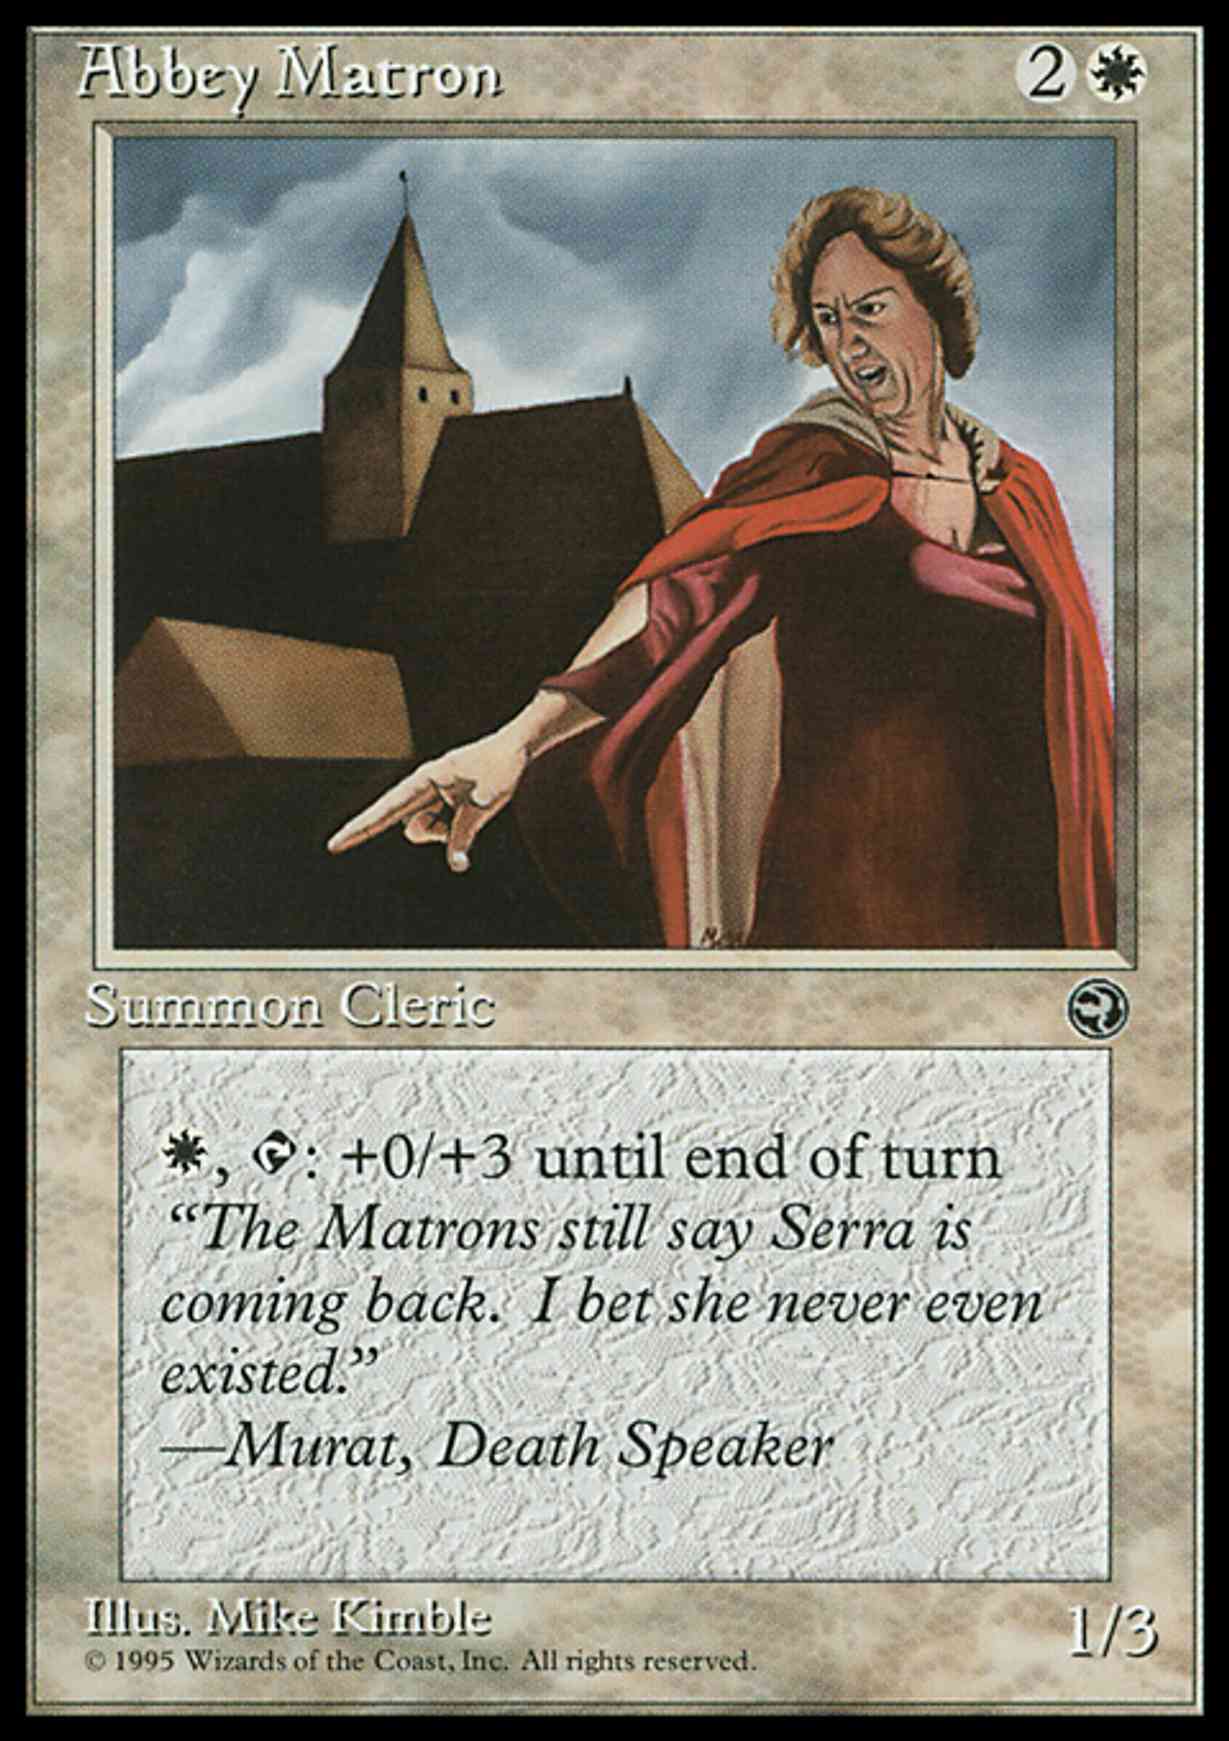 Abbey Matron [Version 2] magic card front